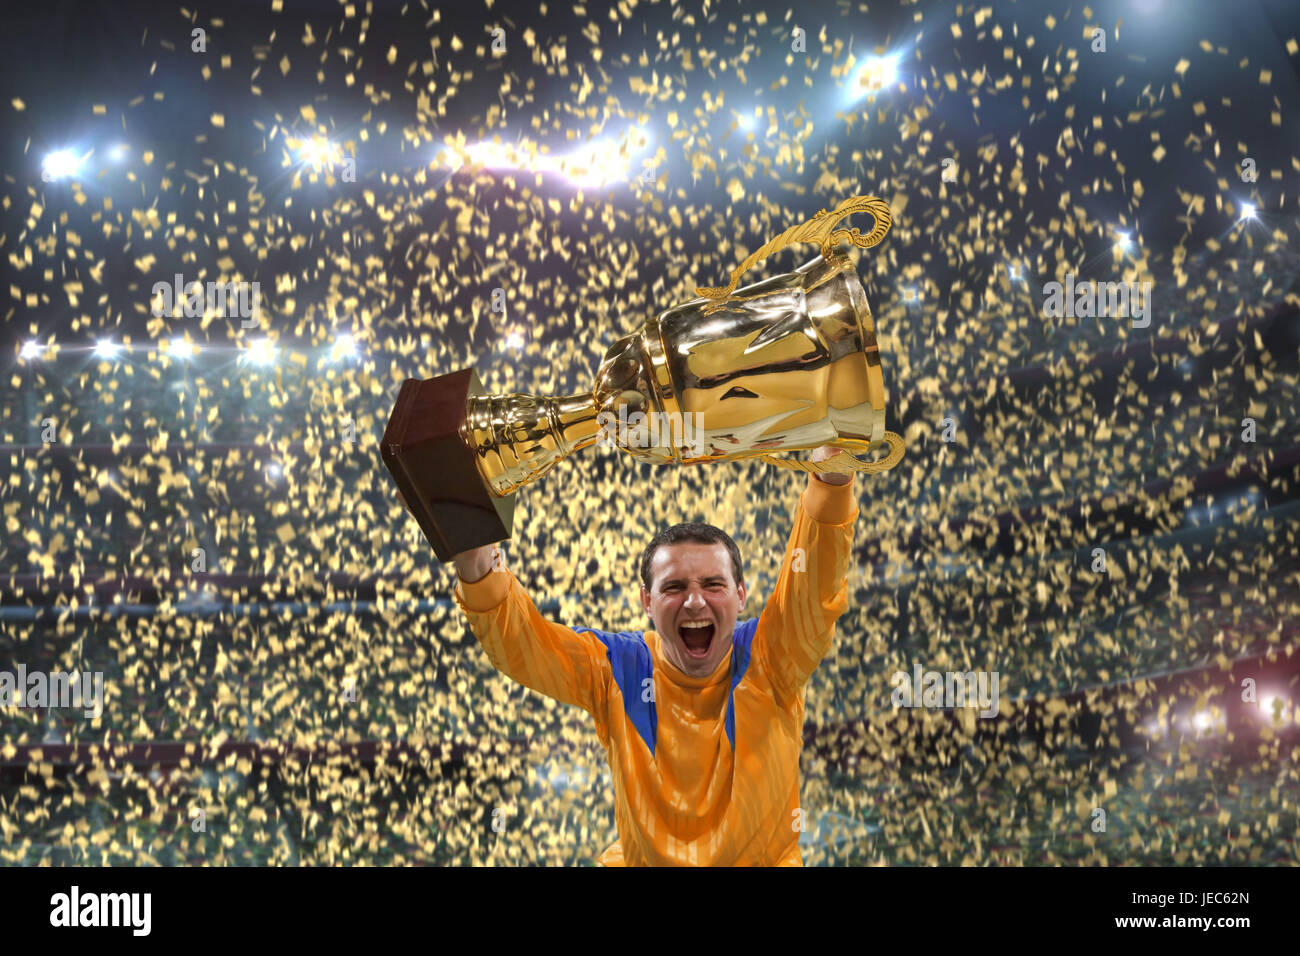 Footballer, winner's cup, winner, football stadium, cheering, confetti, Stock Photo